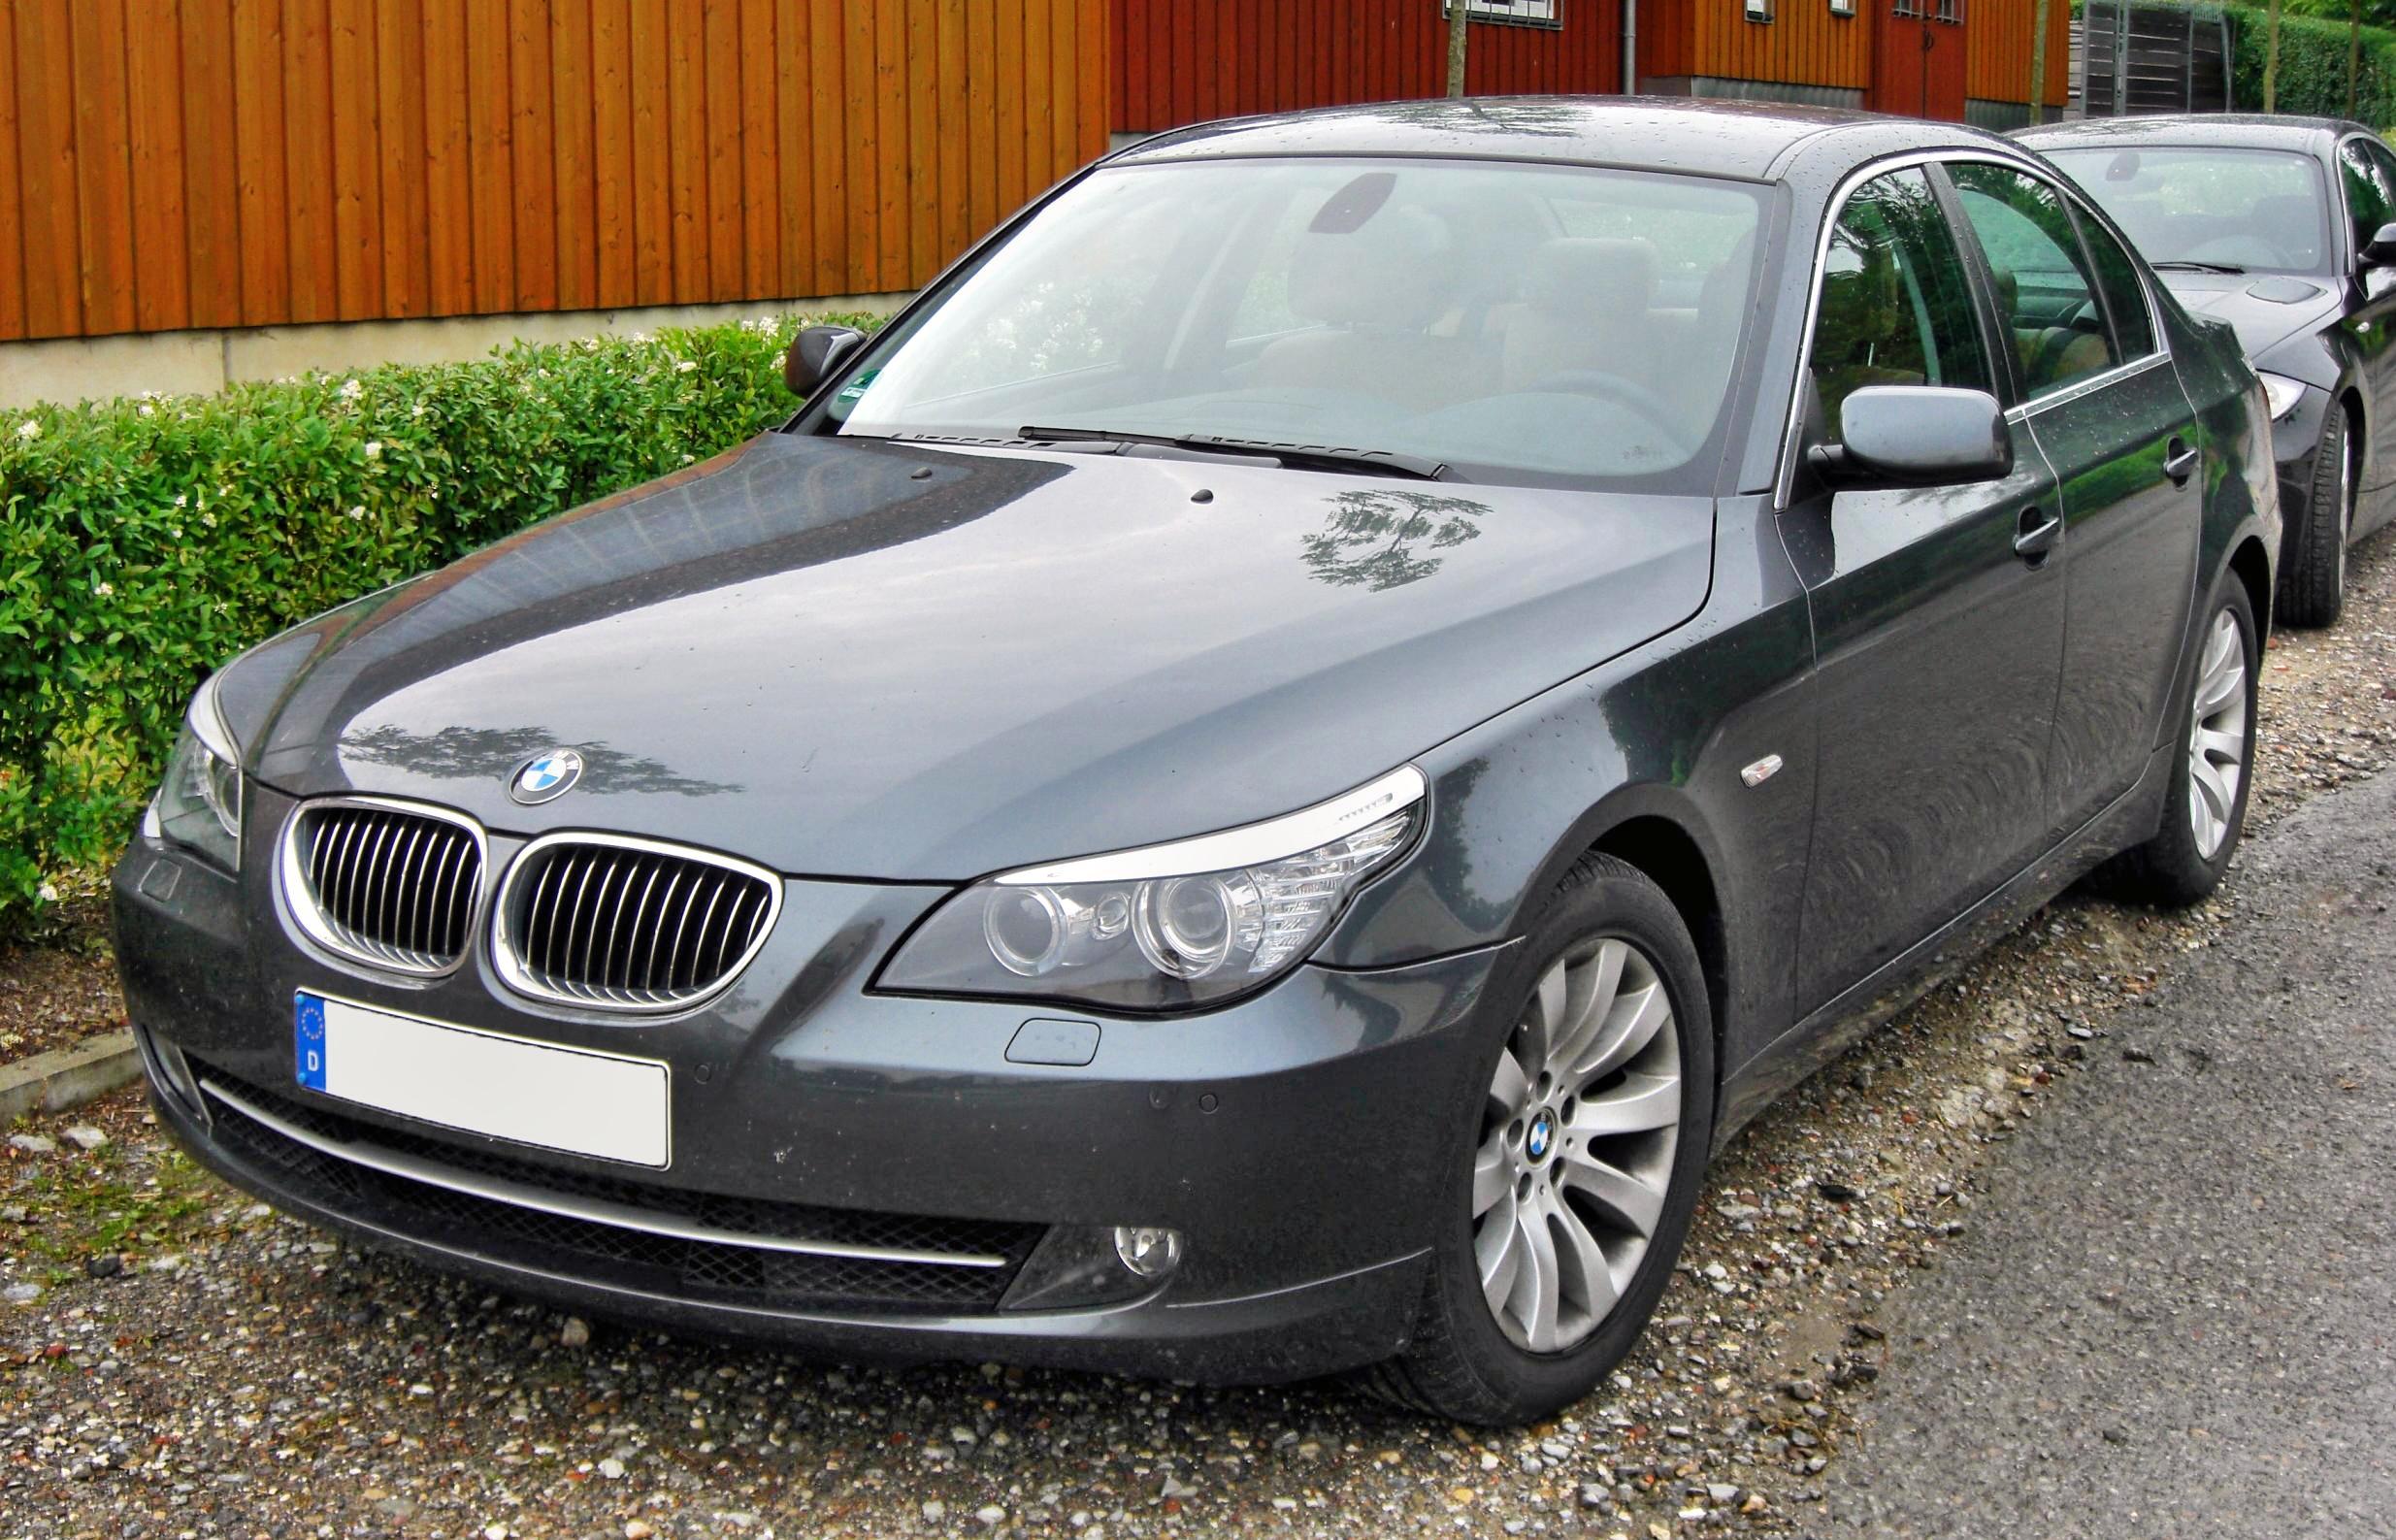 File:BMW 530i (E60) Facelift 20090615 front.JPG - Wikipedia, the ...